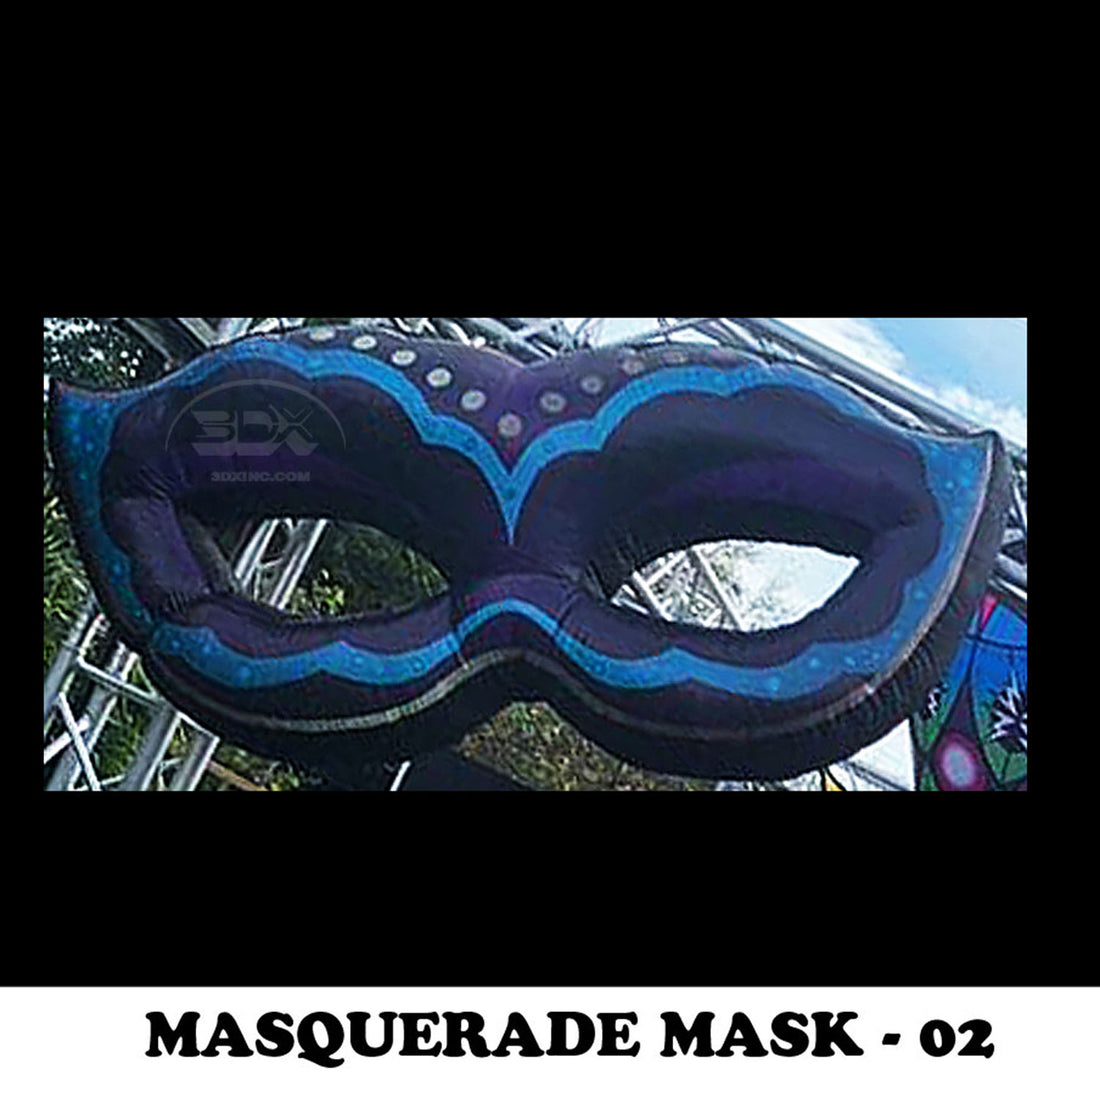 MASQUERADE MASK - 02